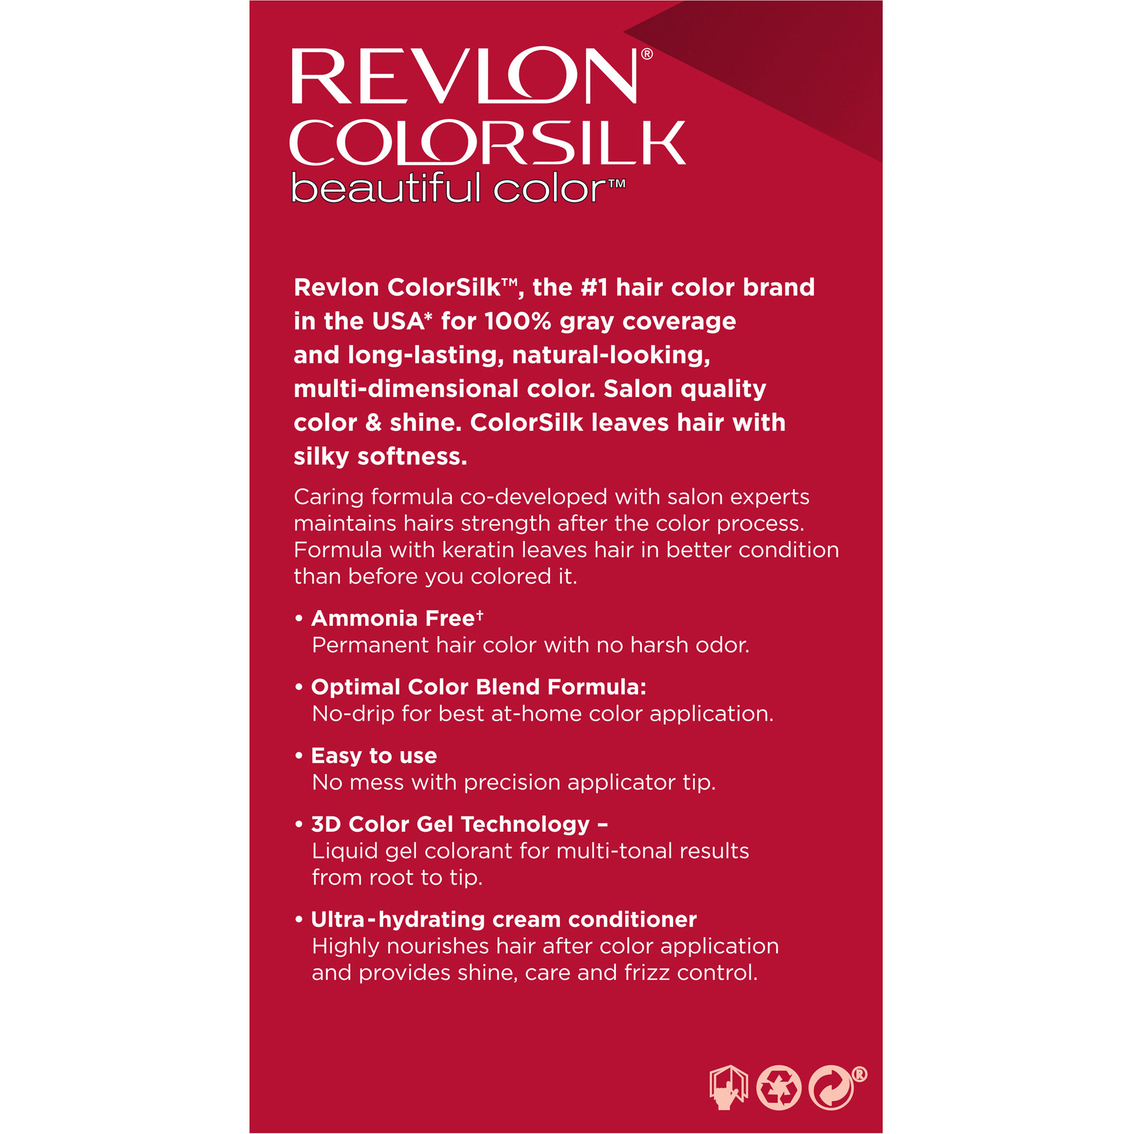 Revlon ColorSilk Beautiful Color Hair Color - Image 4 of 5